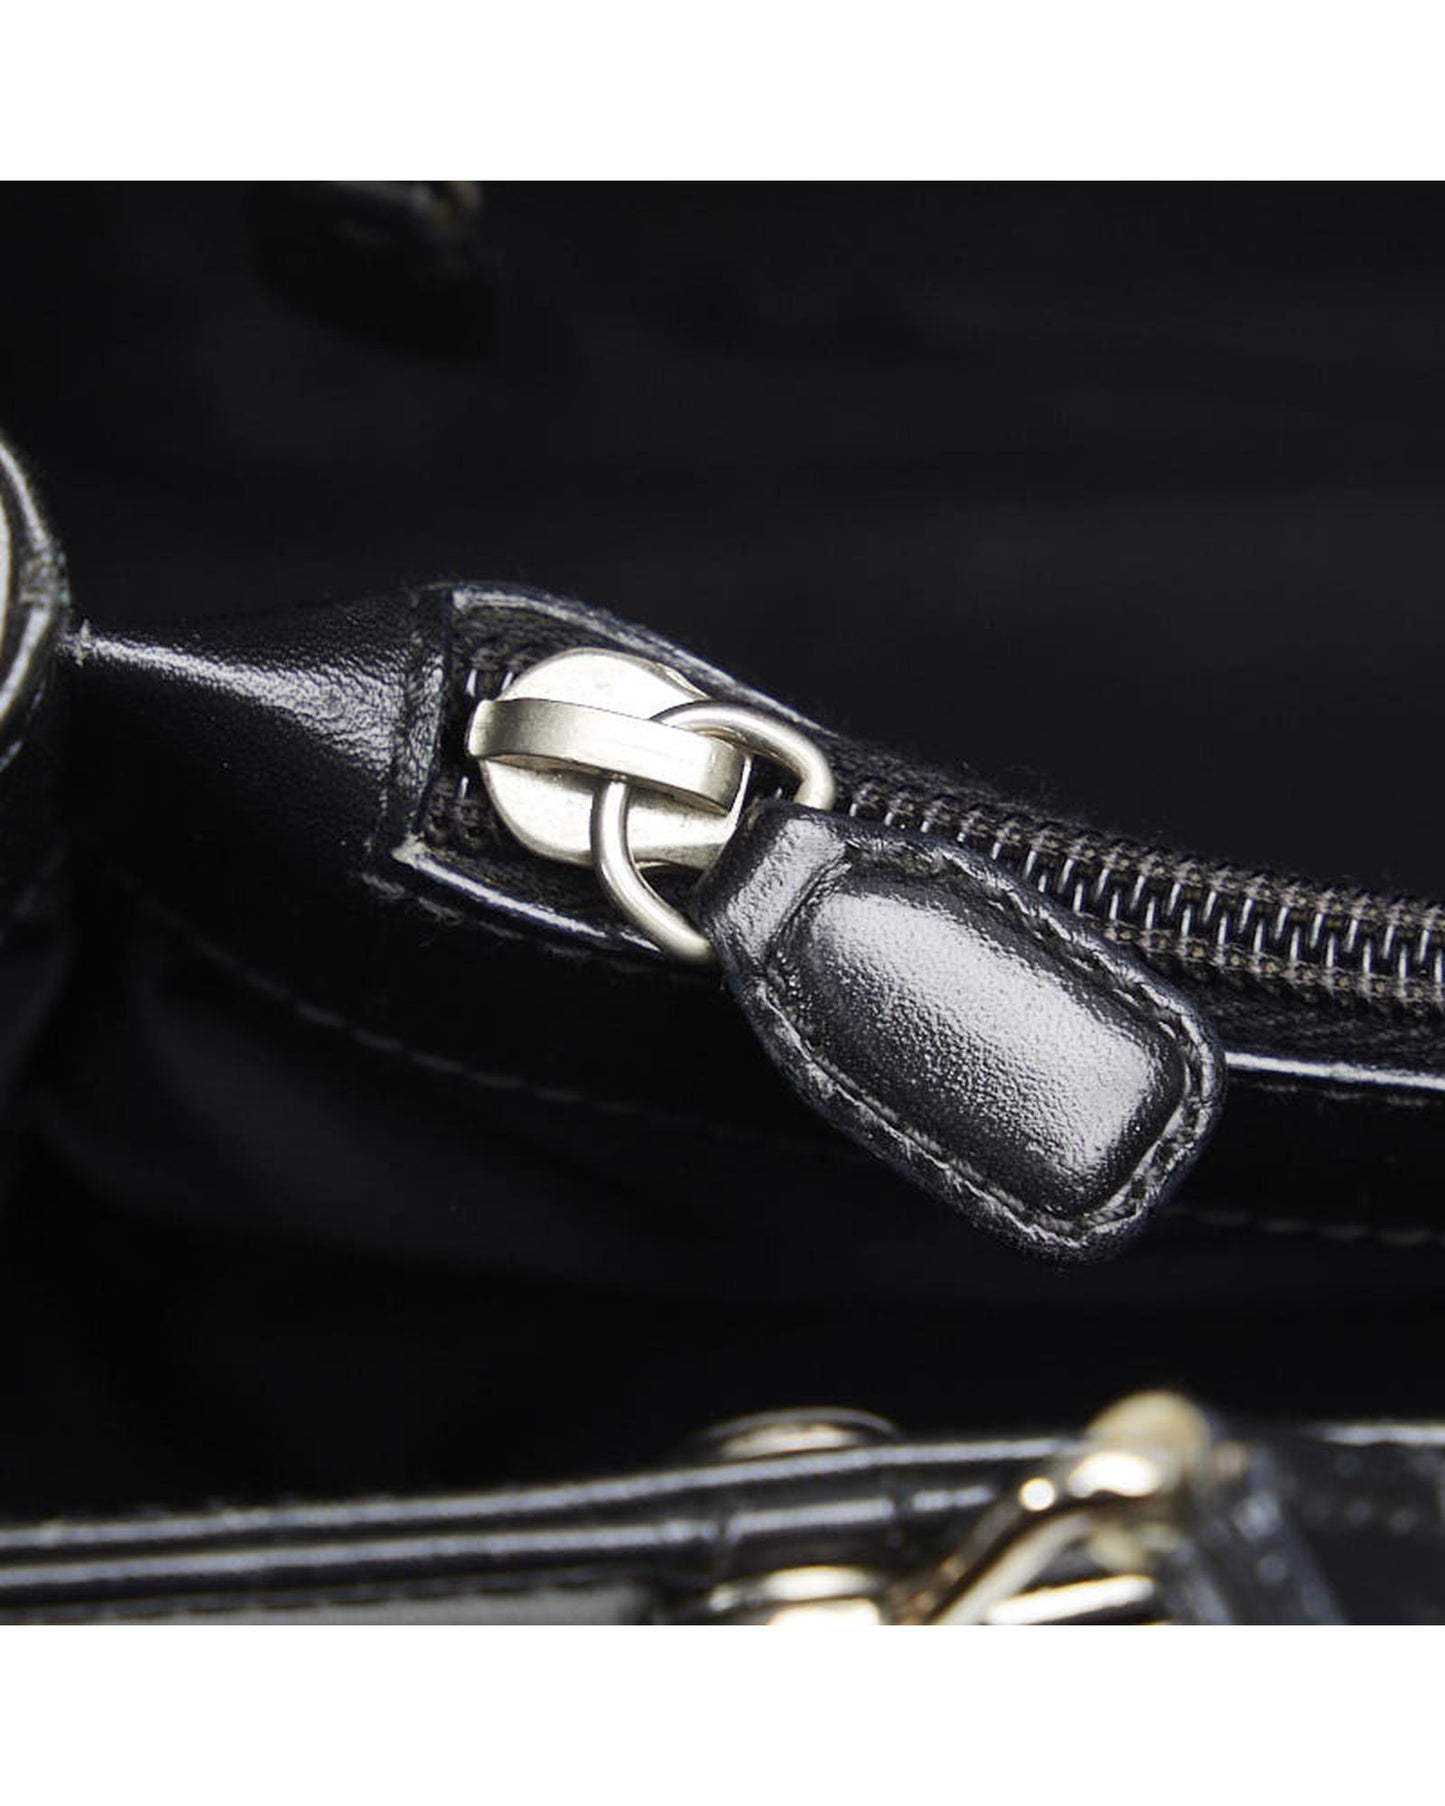 Dior Men's Black Jean Pocket Handbag by Dior - 35-20-11.5 in Black